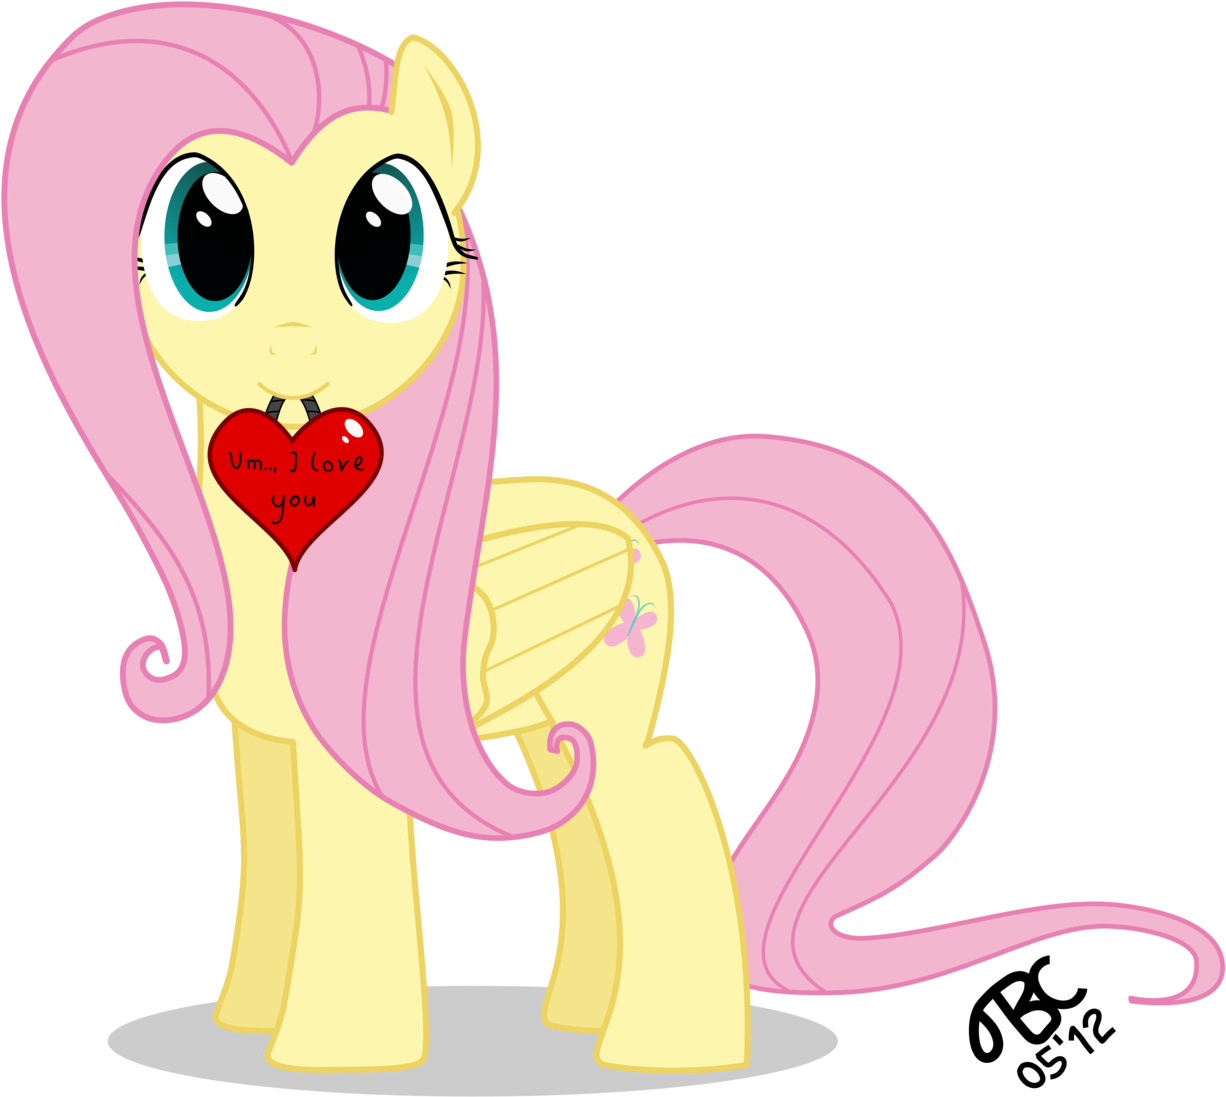 Fluttershy - Um - - , I Love You By Tbcroco - My Little Pony Fluttershy Love (1280x1120)